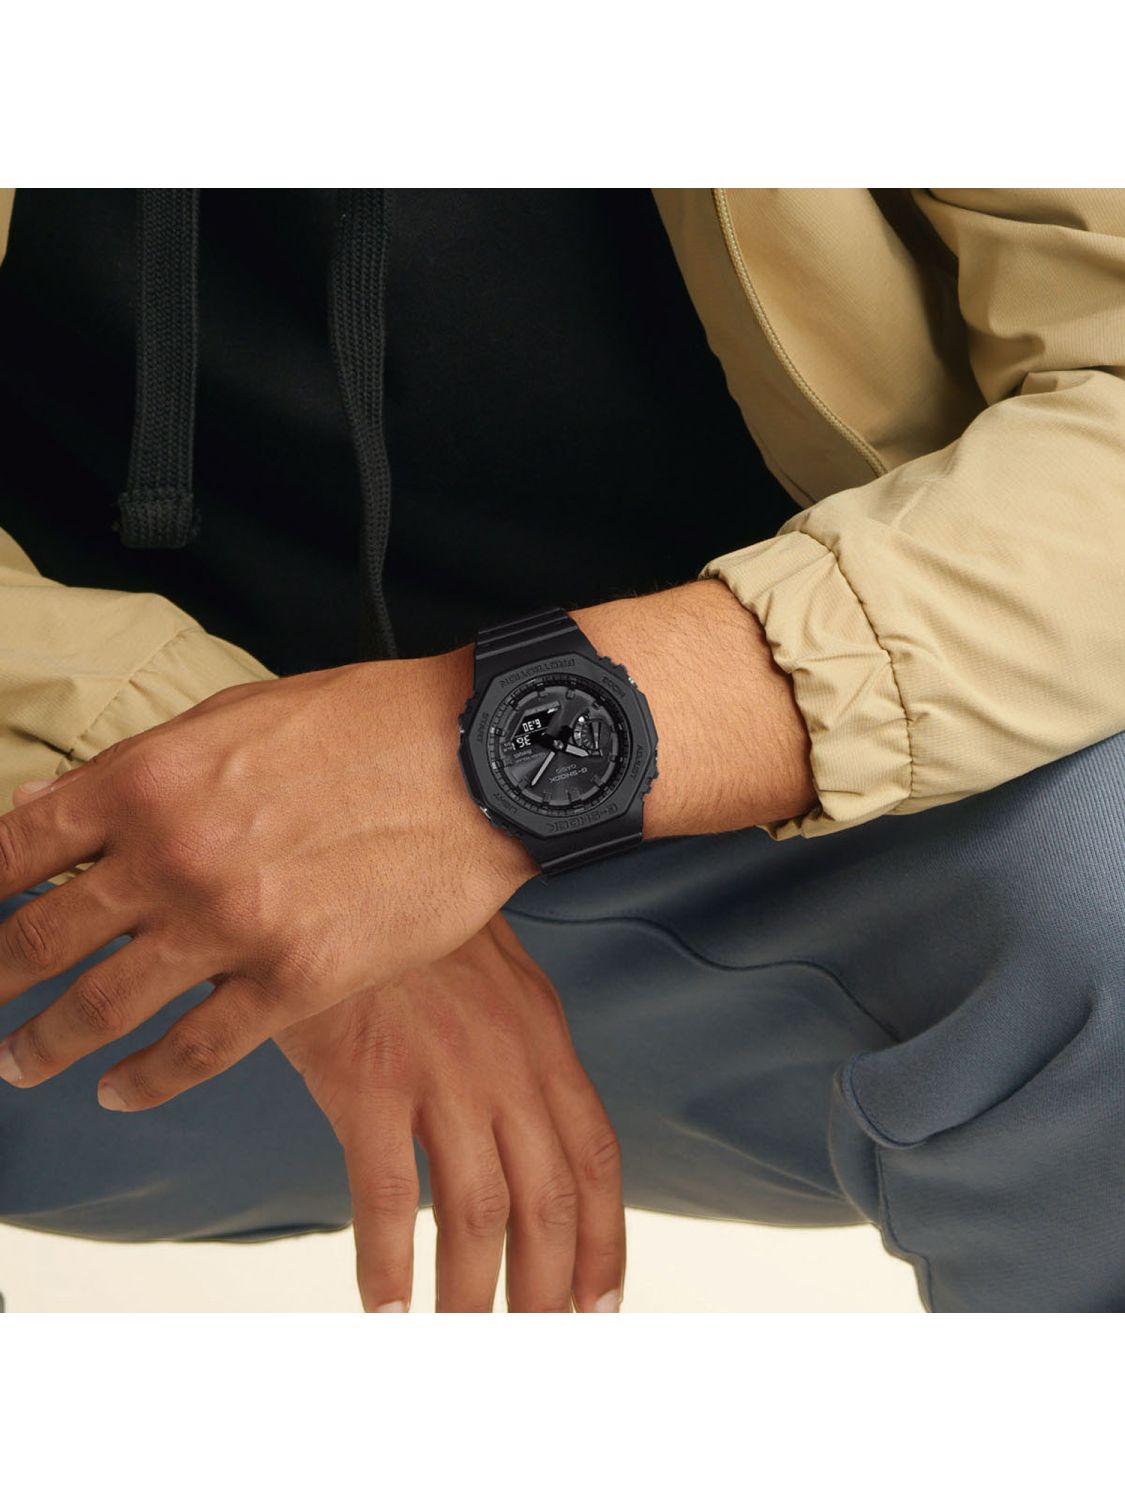 Men\'s GA-B2100-1A1ER G-Shock Watch uhrcenter Bluetooth Casio • Black Classic Solar